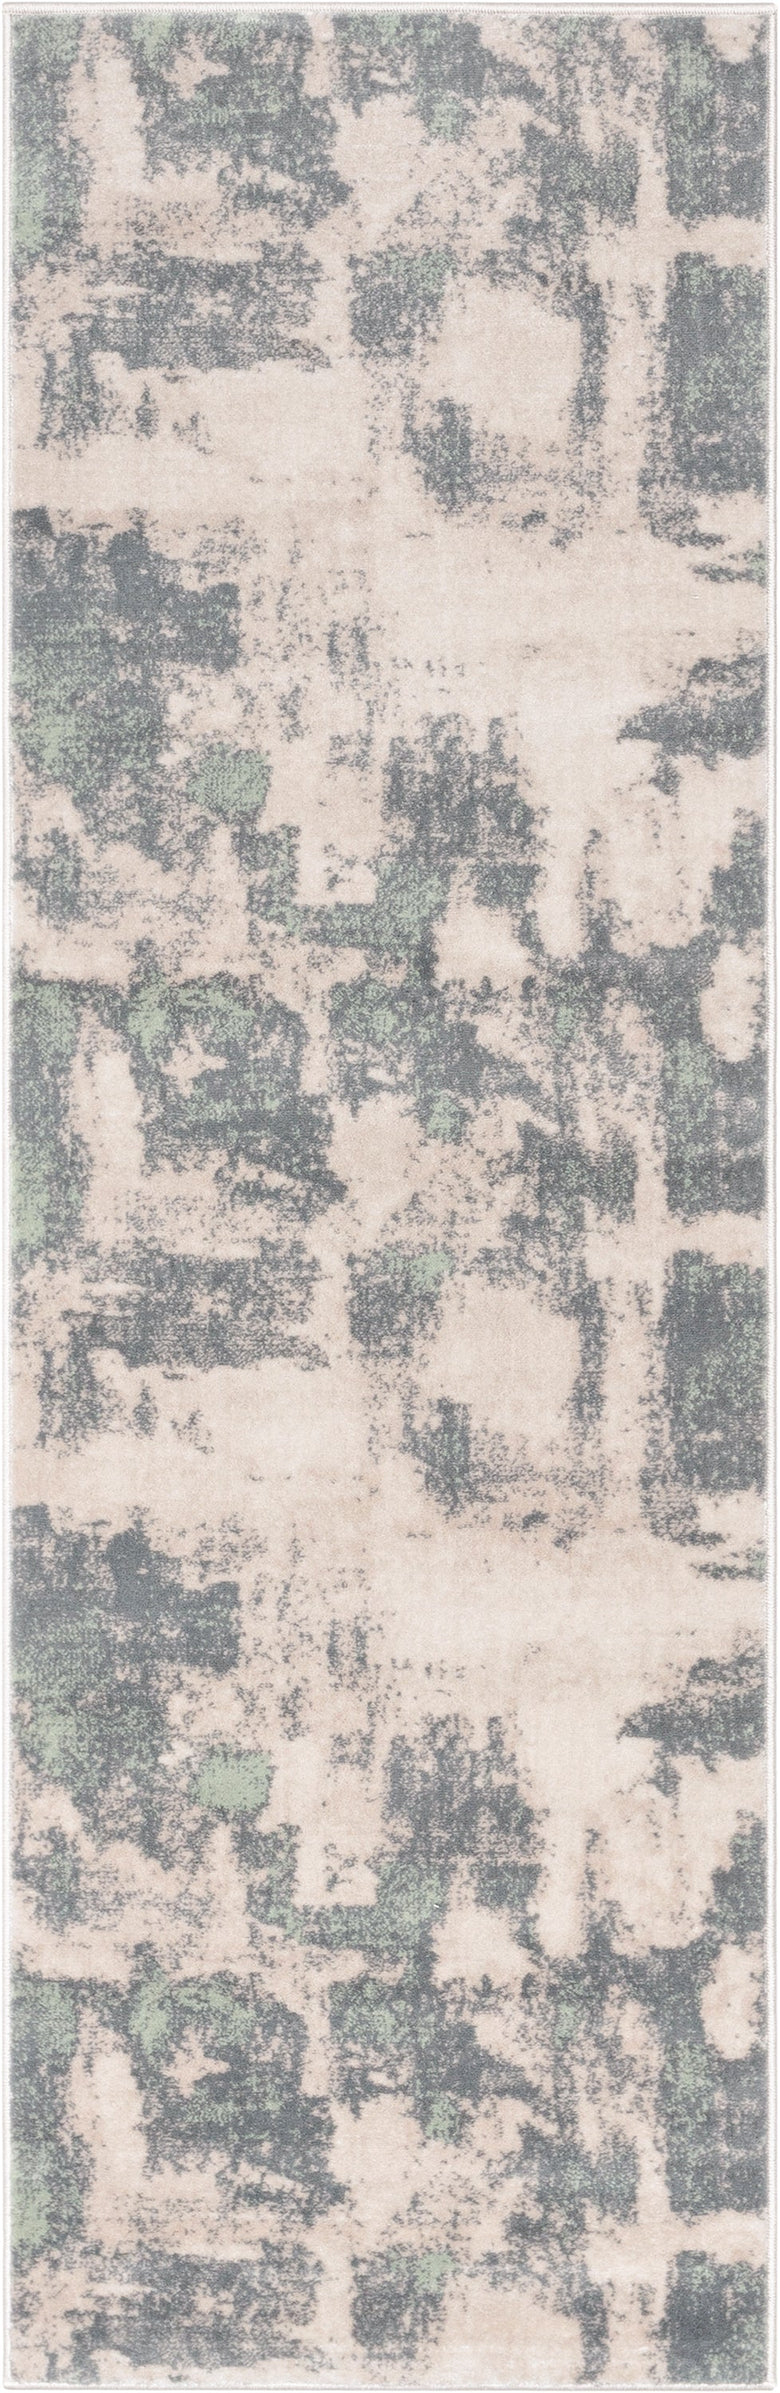 Kalia Modern Abstract Grey Green Rug 54555